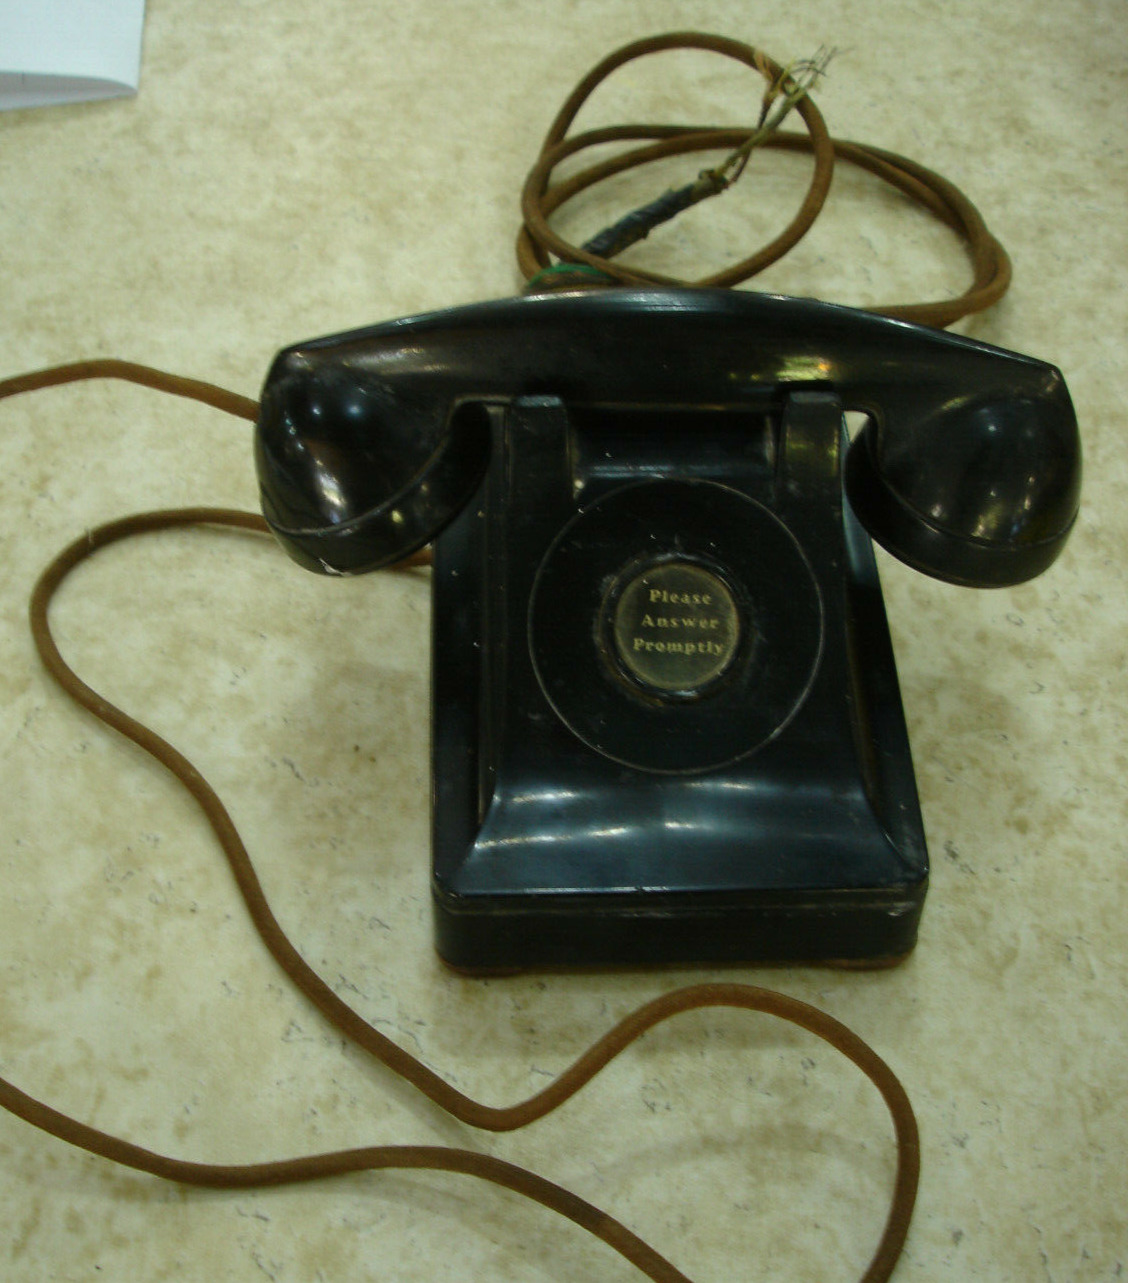 Vintage Bell System, Western Electric Desk Phone, Intercom Style, Model Fi